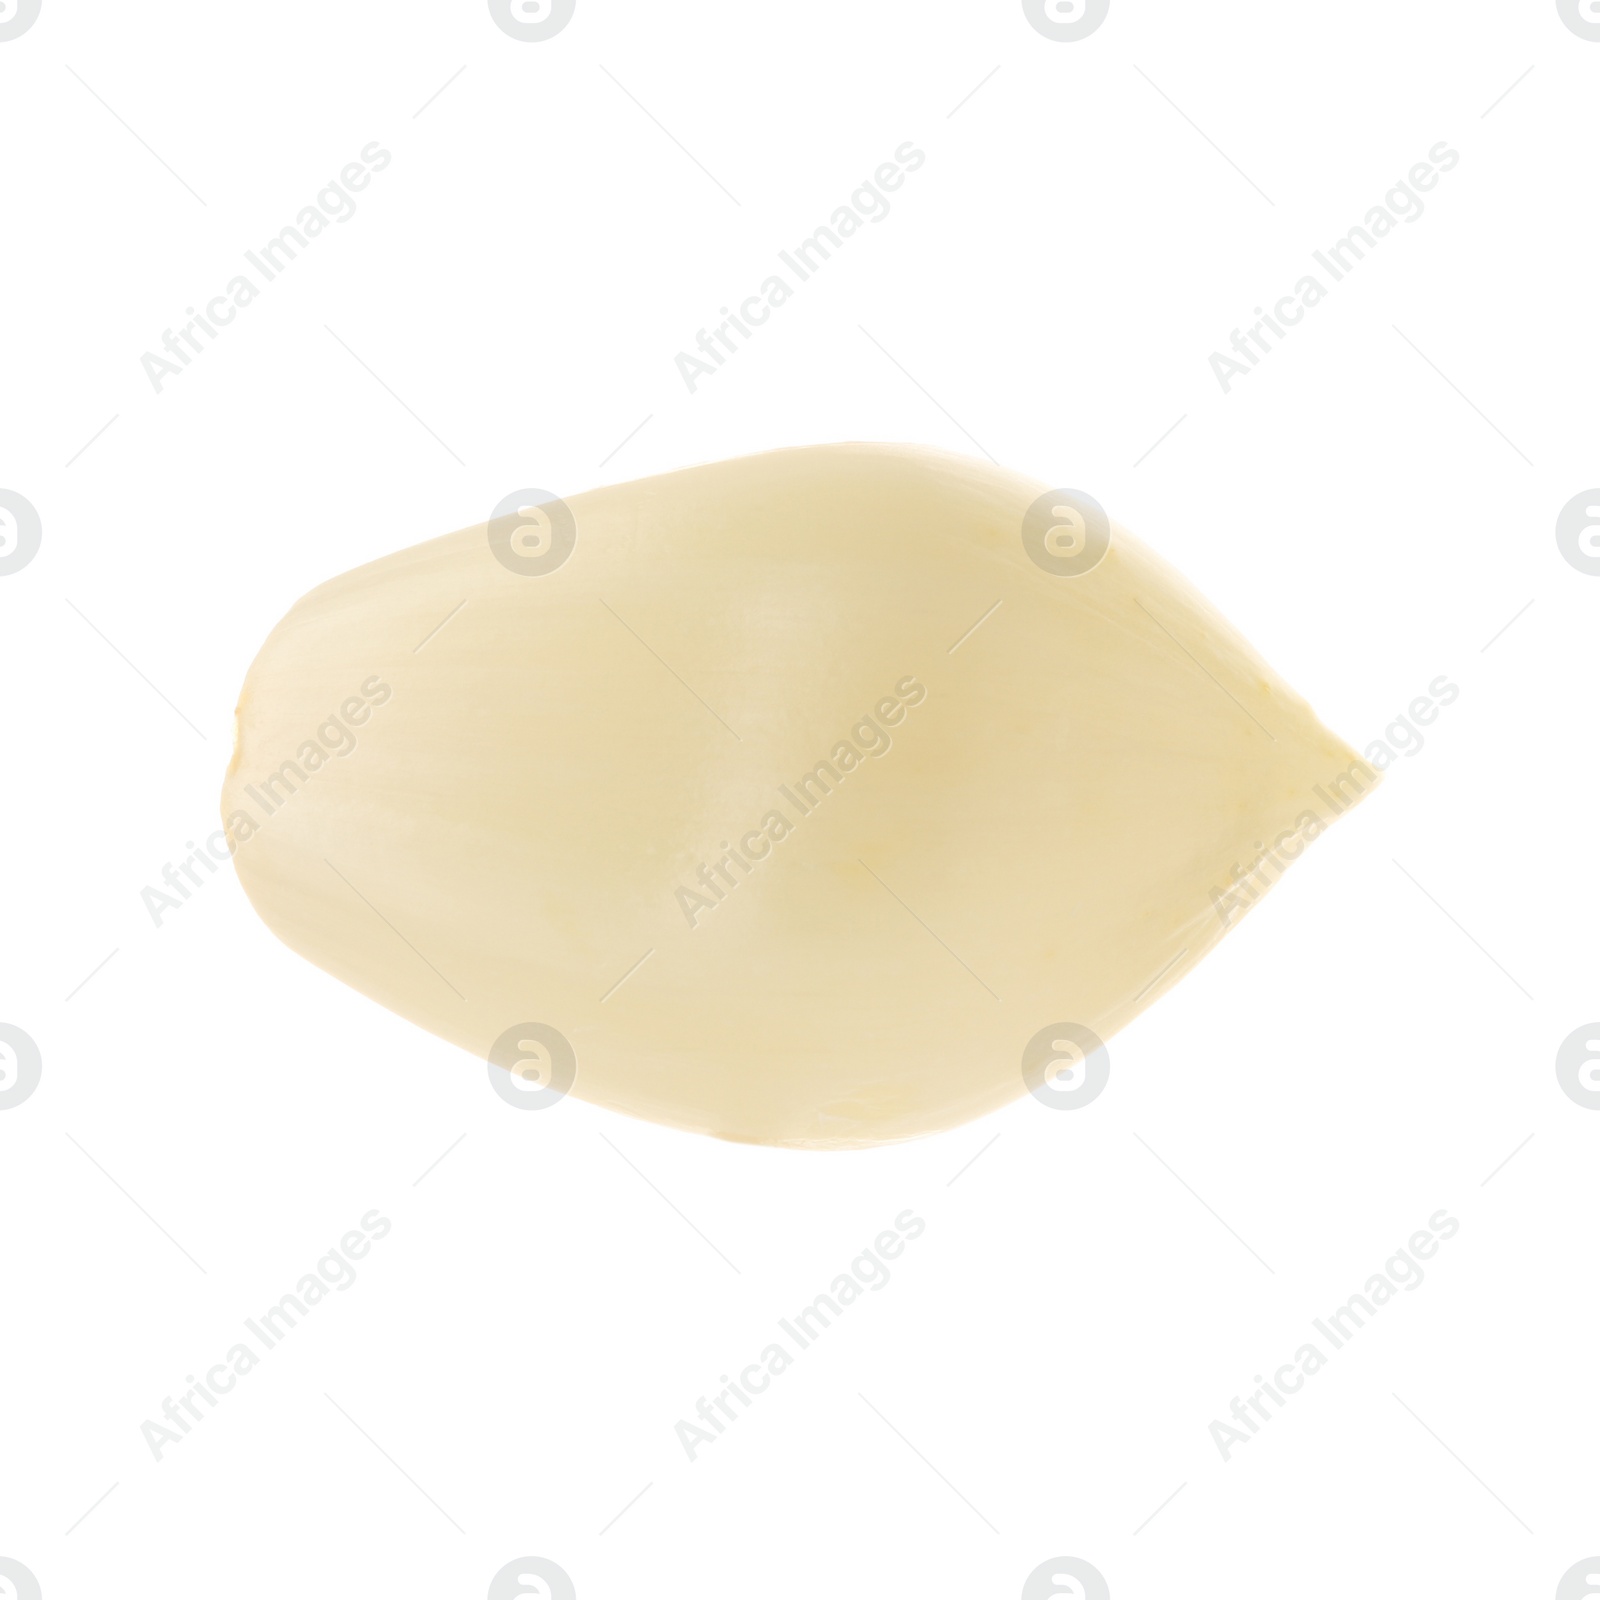 Photo of One peeled clove of garlic isolated on white